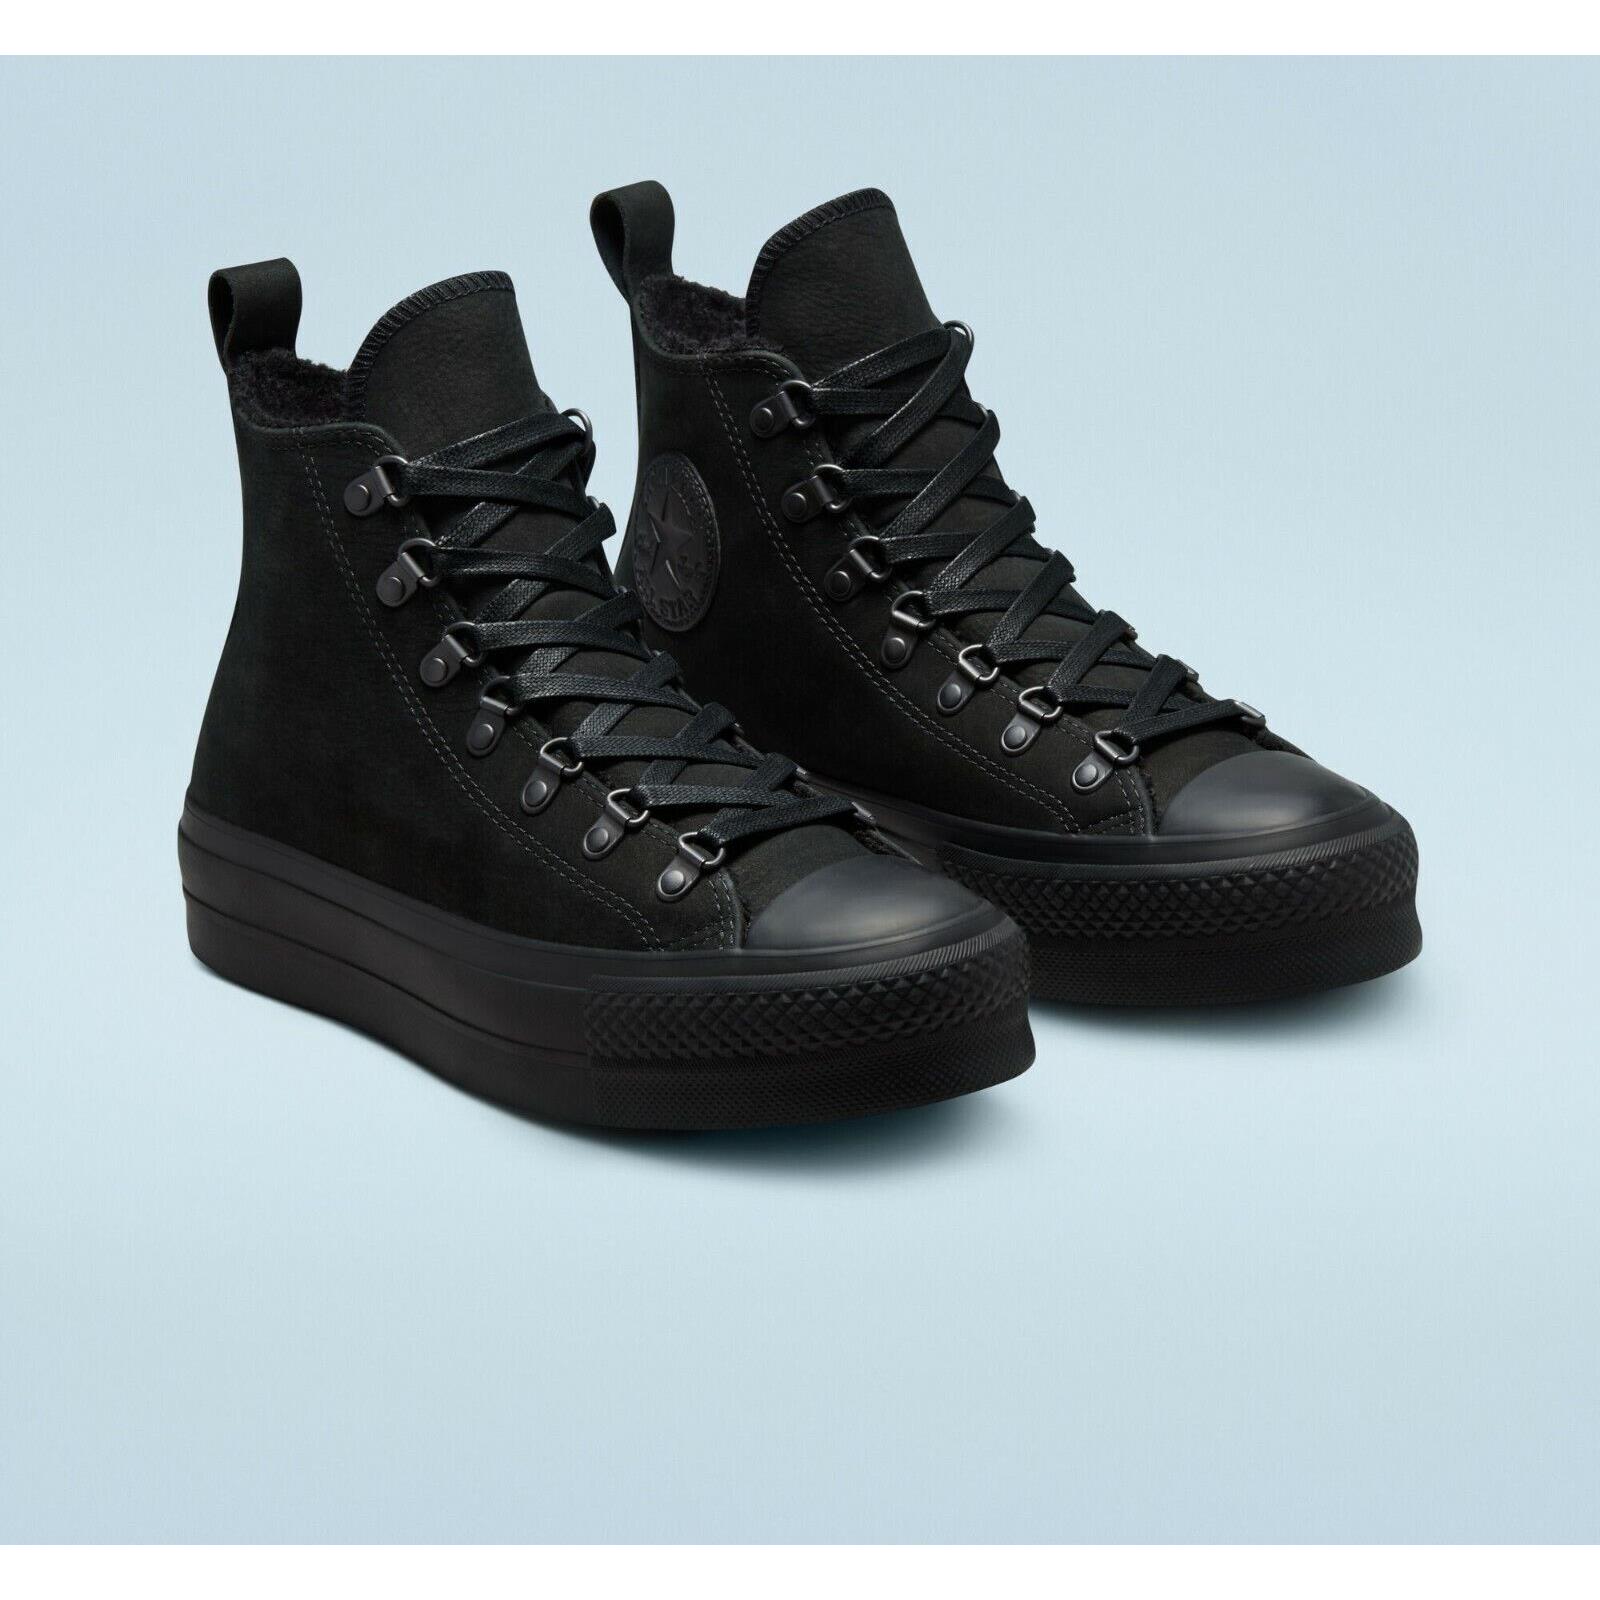 Converse Chuck Taylor All Star Platform Shoes Black 173097C Womens 10 Mens 8